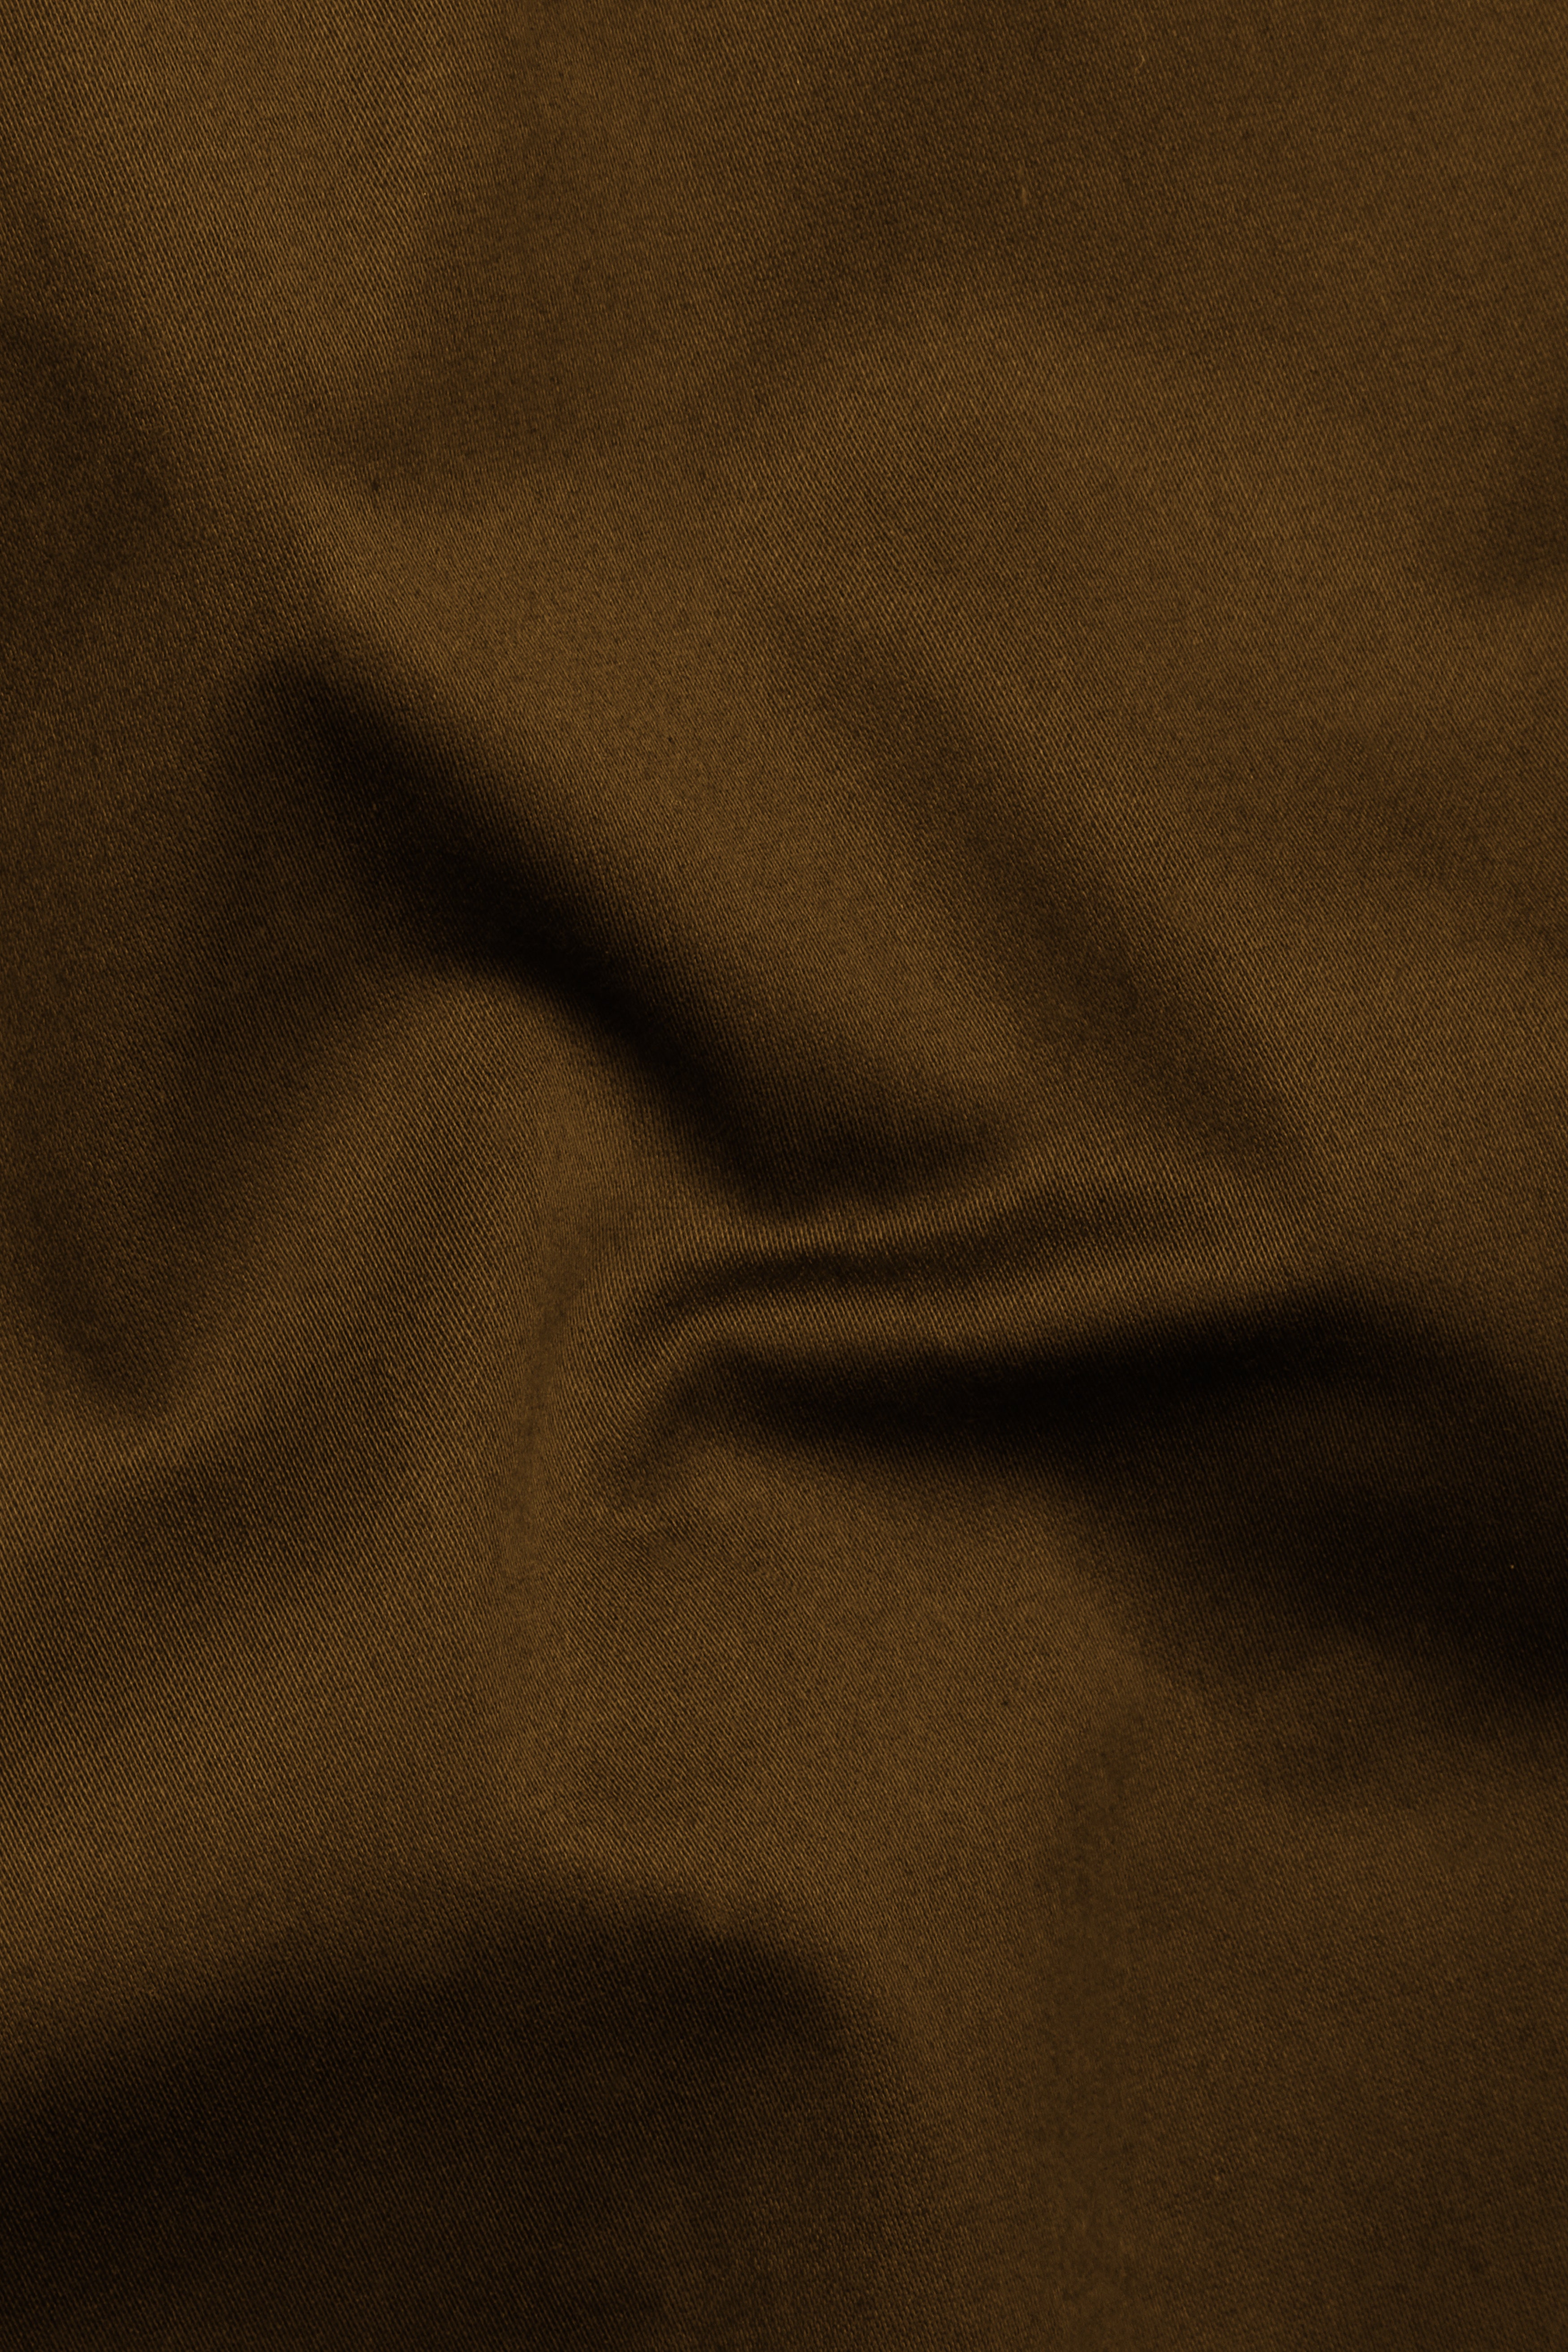 Metallic Bronze Brown Premium Cotton Stretchable Traveler Nehru Jacket WC2780-36, WC2780-38, WC2780-40, WC2780-42, WC2780-44, WC2780-46, WC2780-48, WC2780-50, WC2780-52, WC2780-54, WC2780-56, WC2780-58, WC2780-60